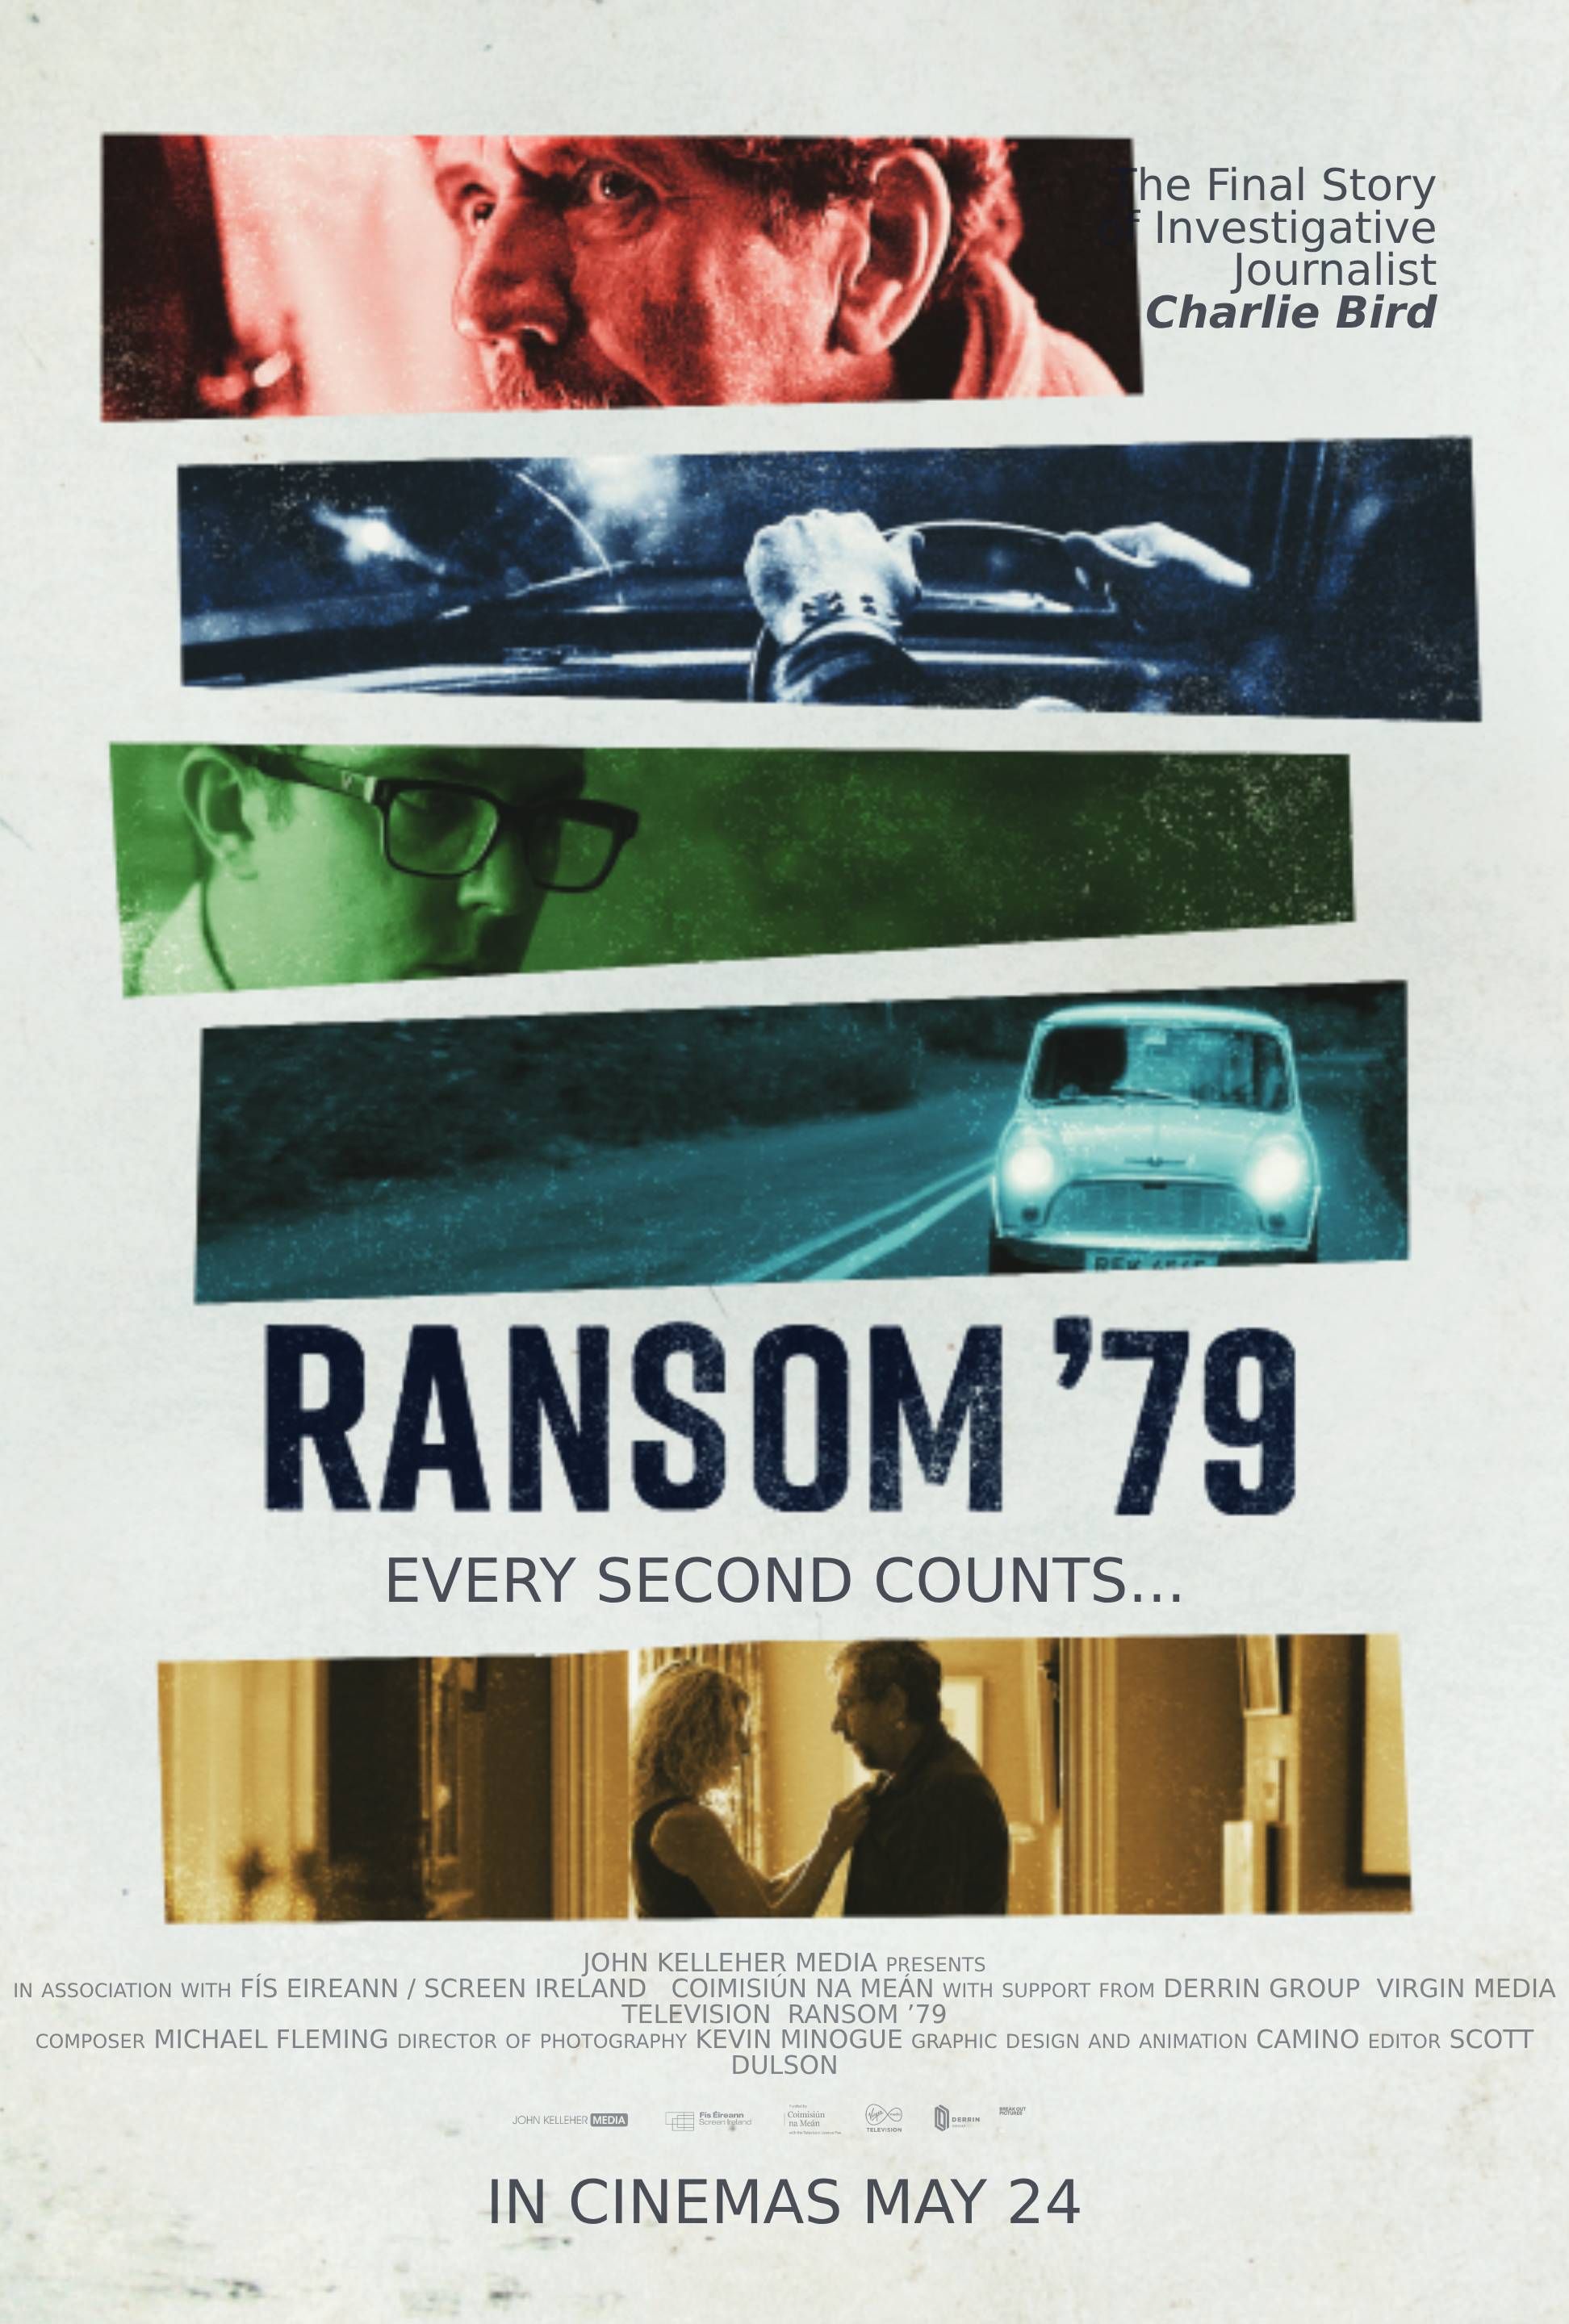 Ransom ‘79 portrait picture